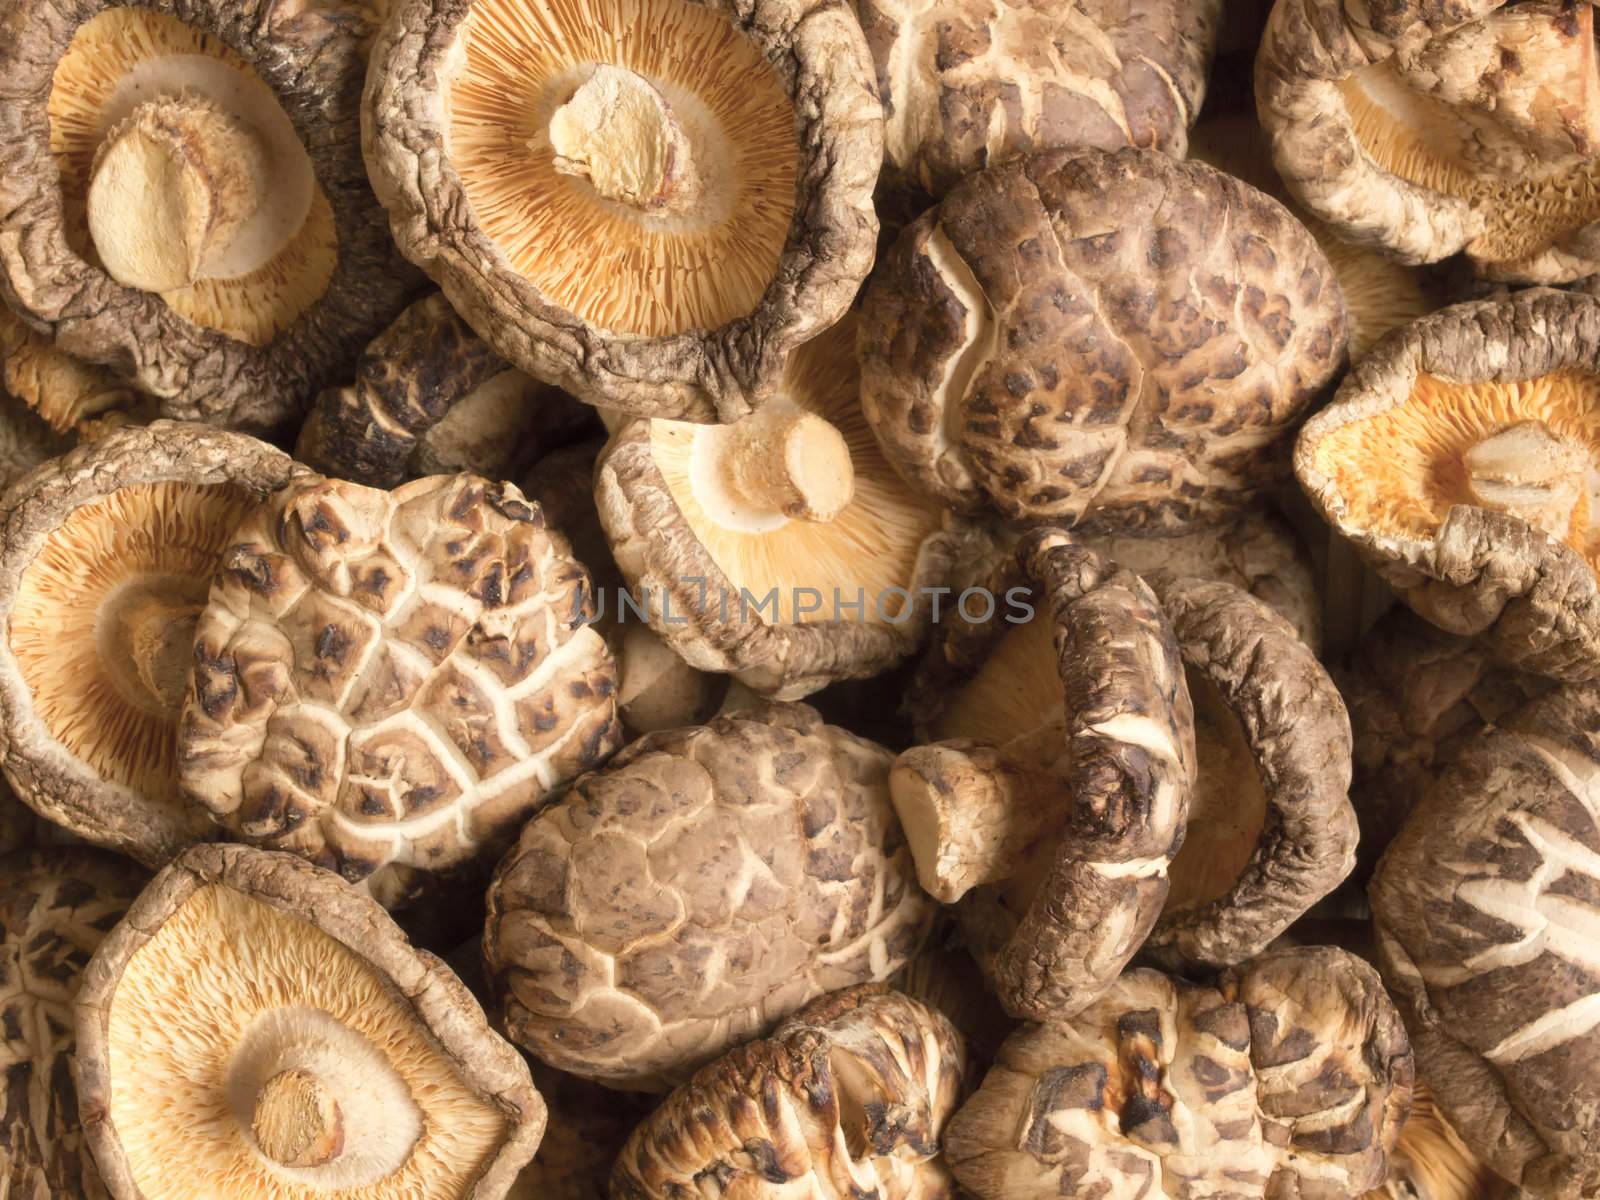 dried shiitake mushrooms by zkruger